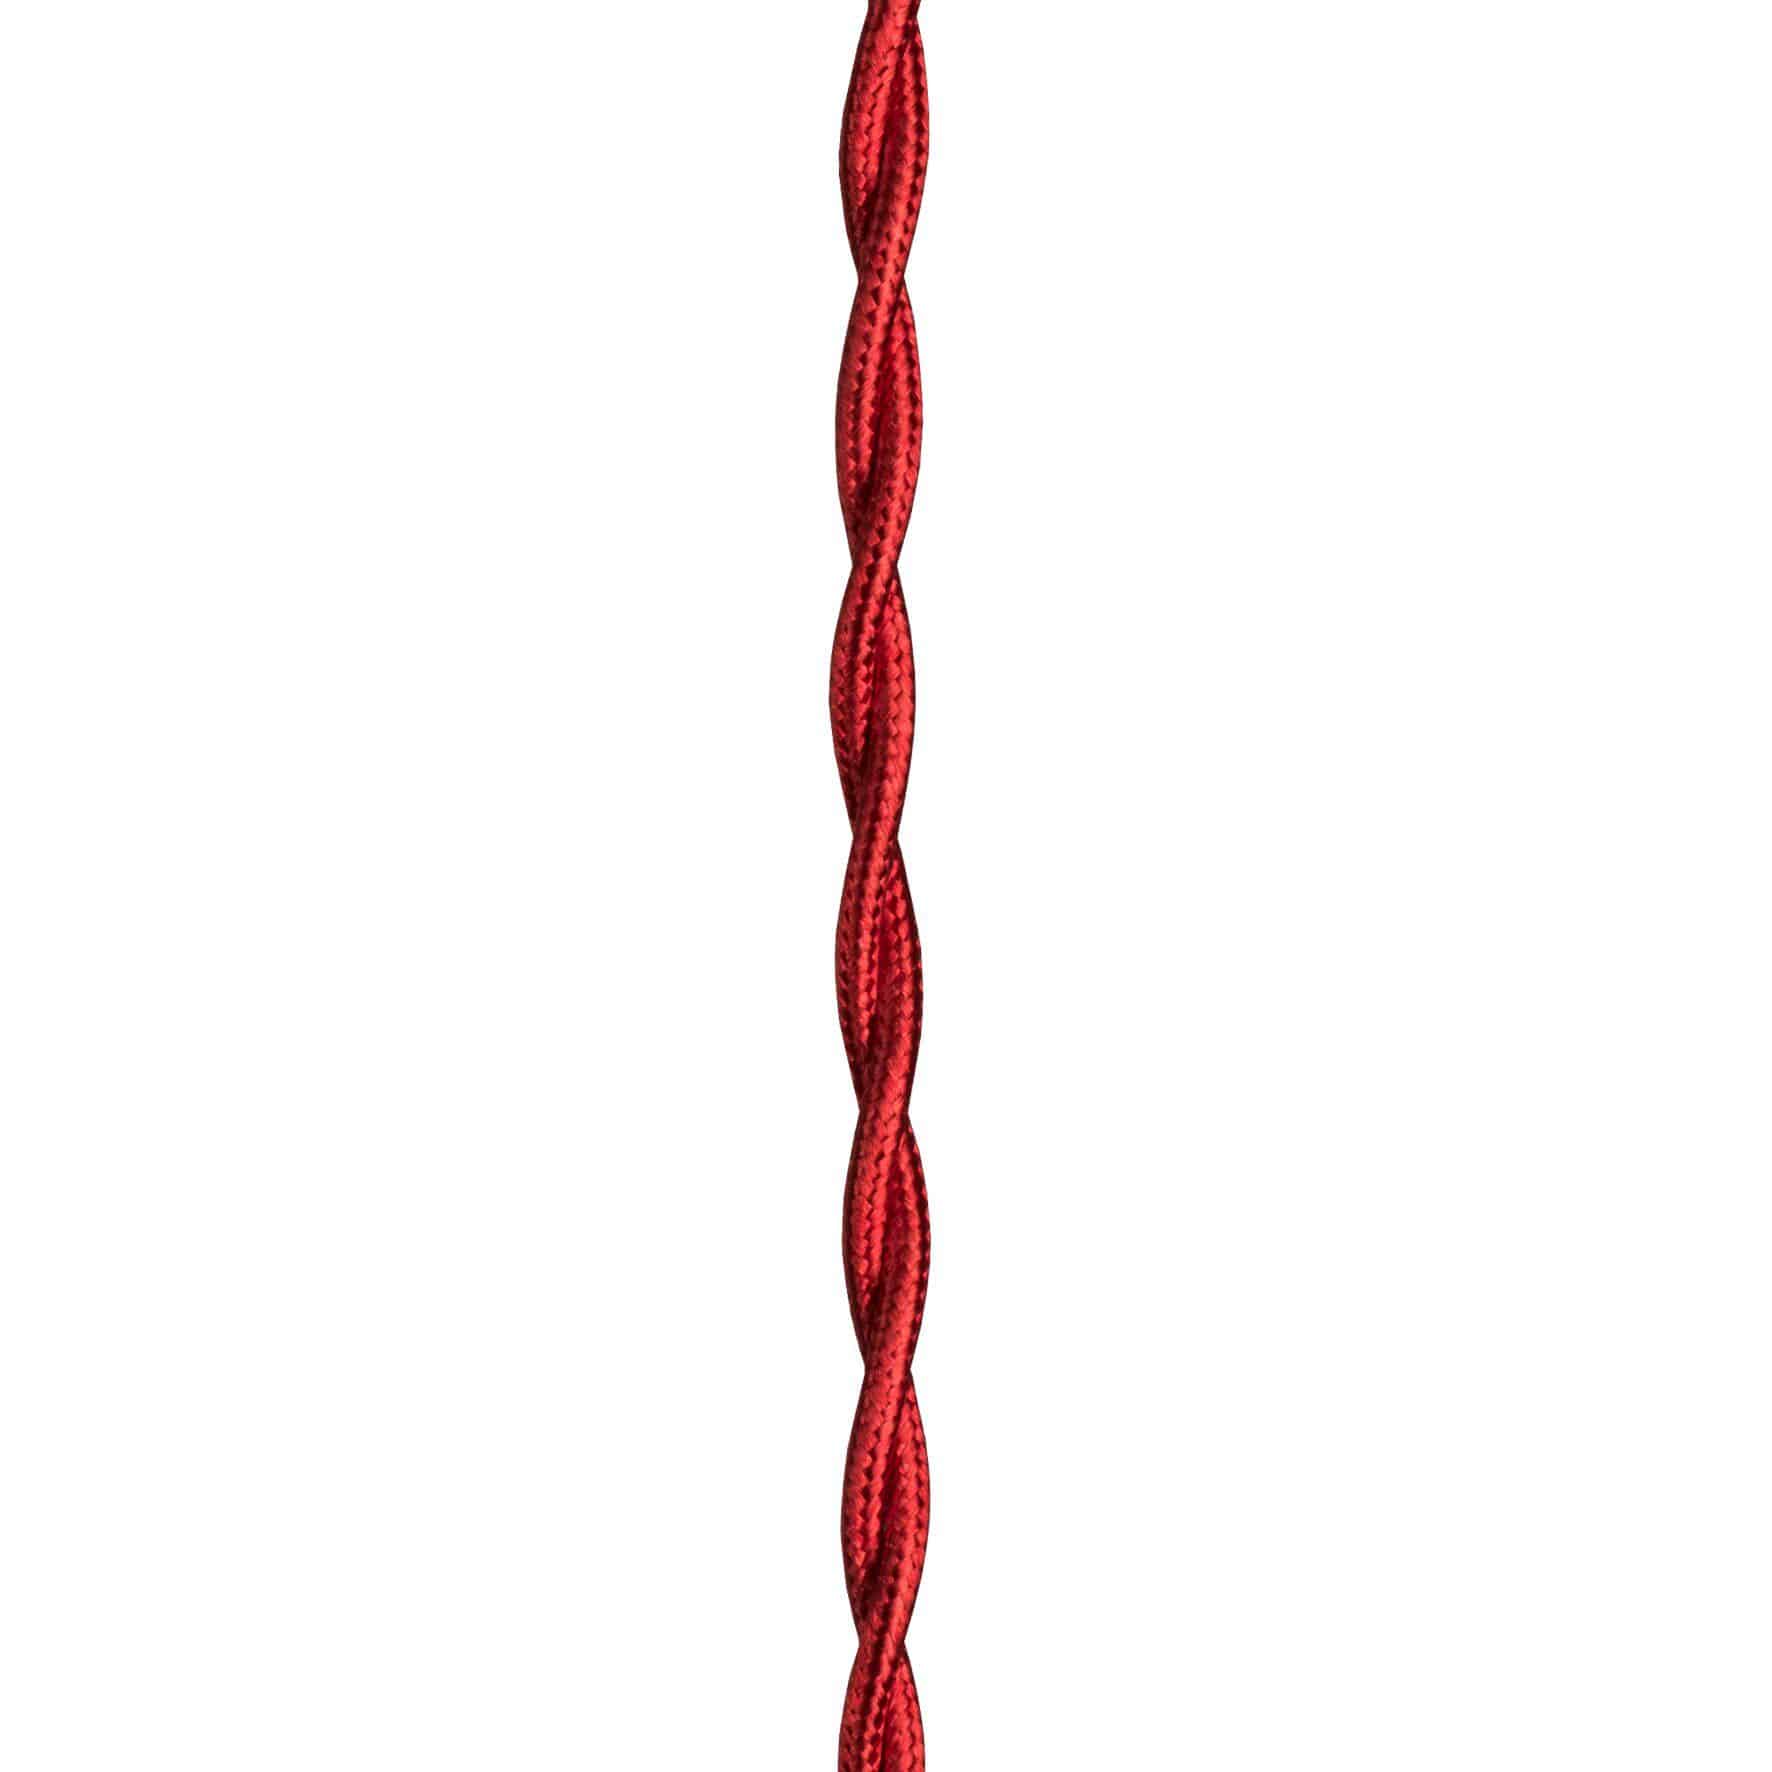 BAILEY 140310 Textilkabel 2x0,75mm², gedreht, Länge 3m, rot metallic